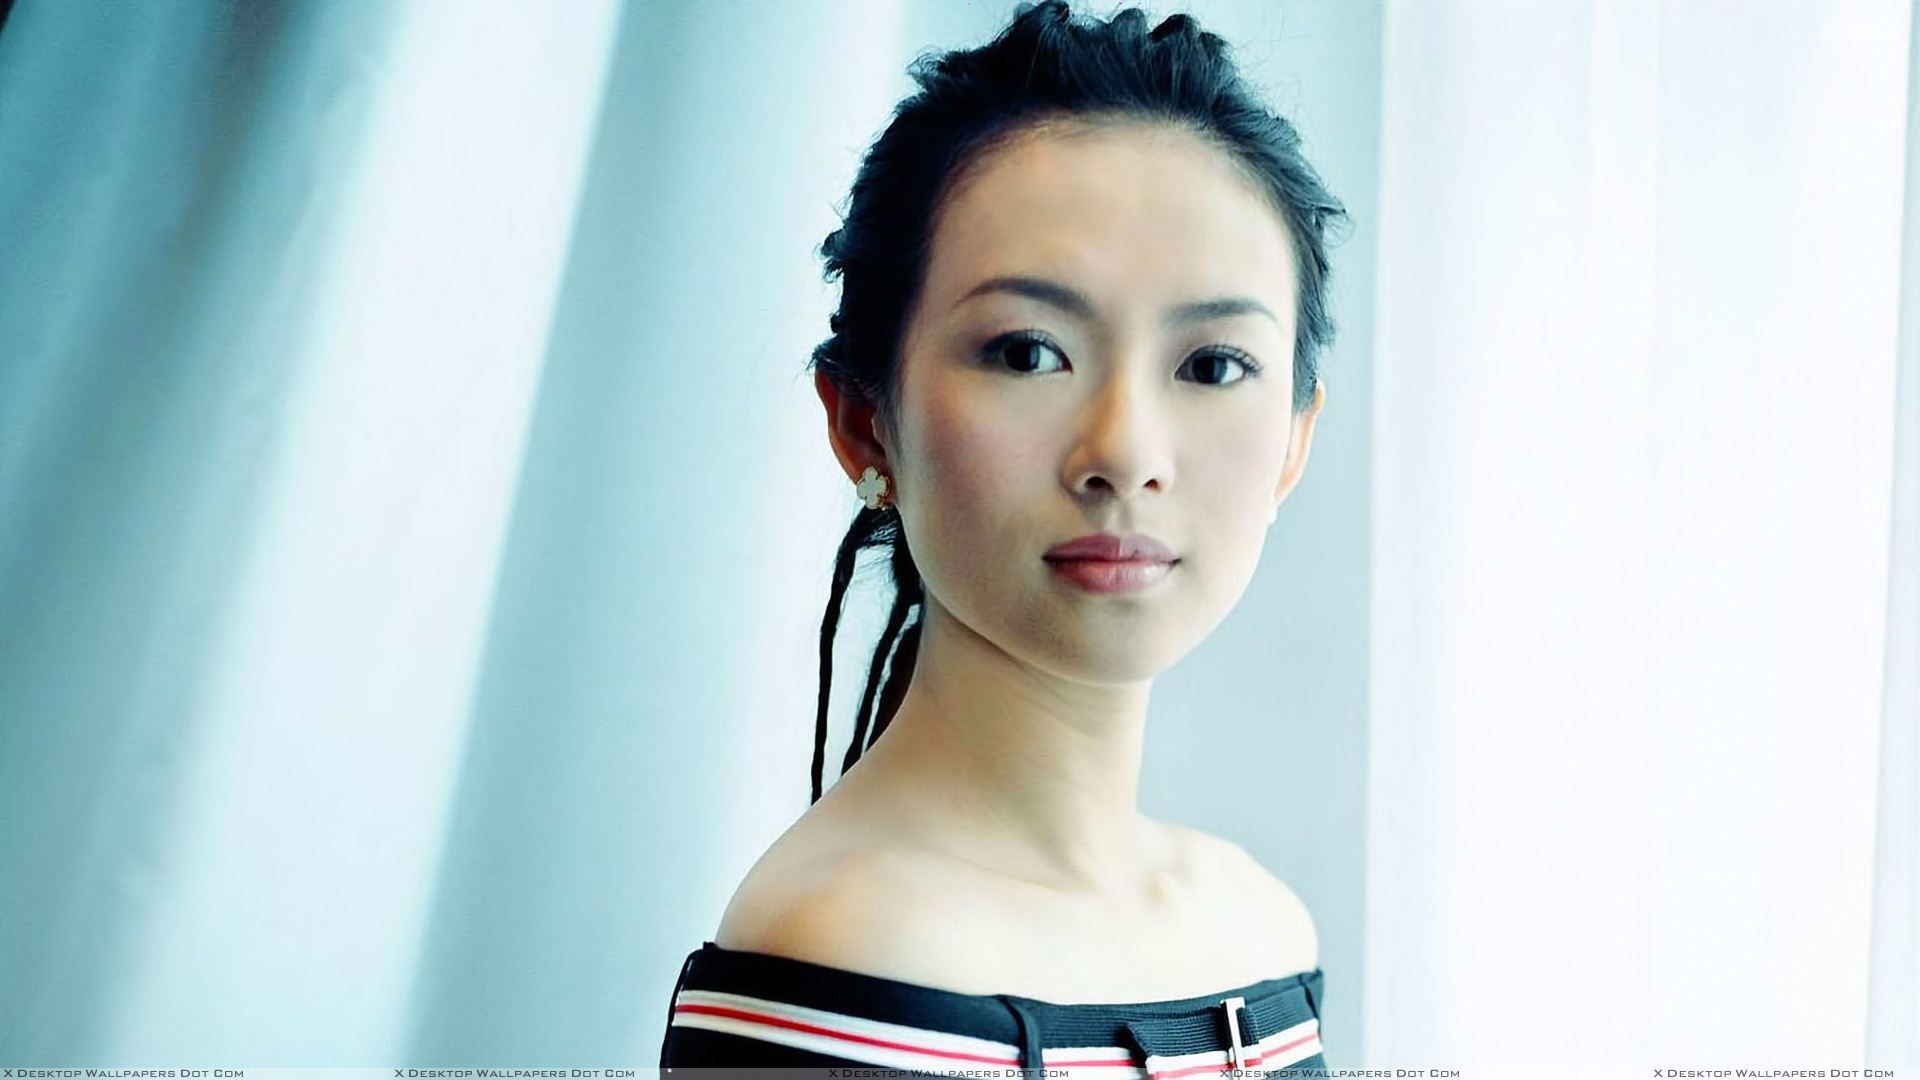 Zhang Ziyi Cute Looking Face Photohoot Wallpaper